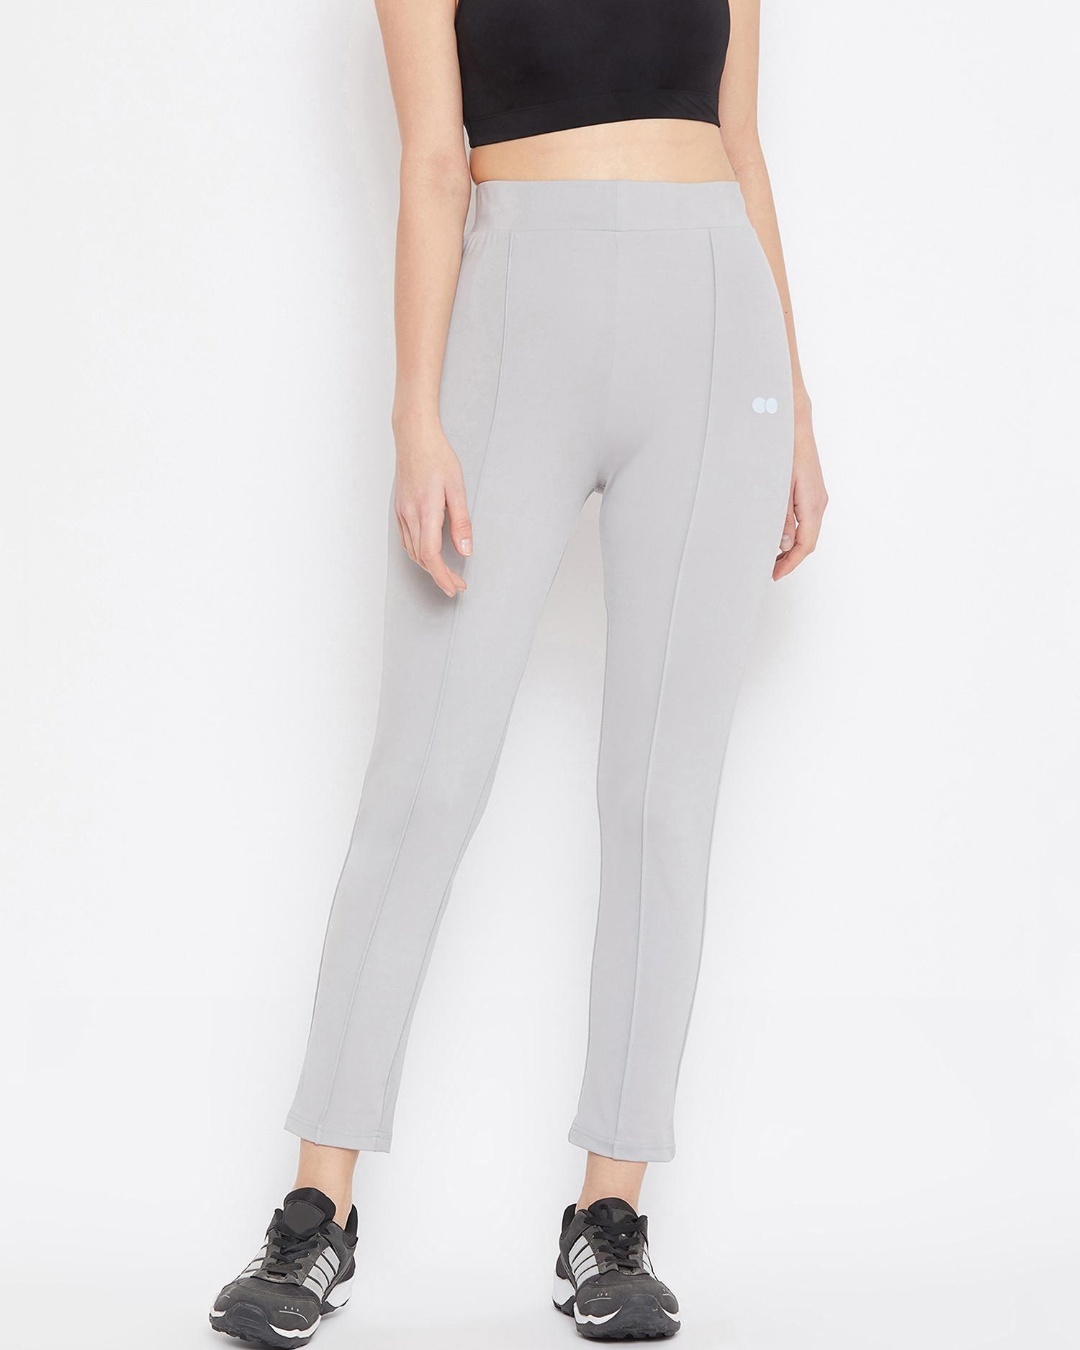 Shop Women's Grey Slim Fit Tights-Back